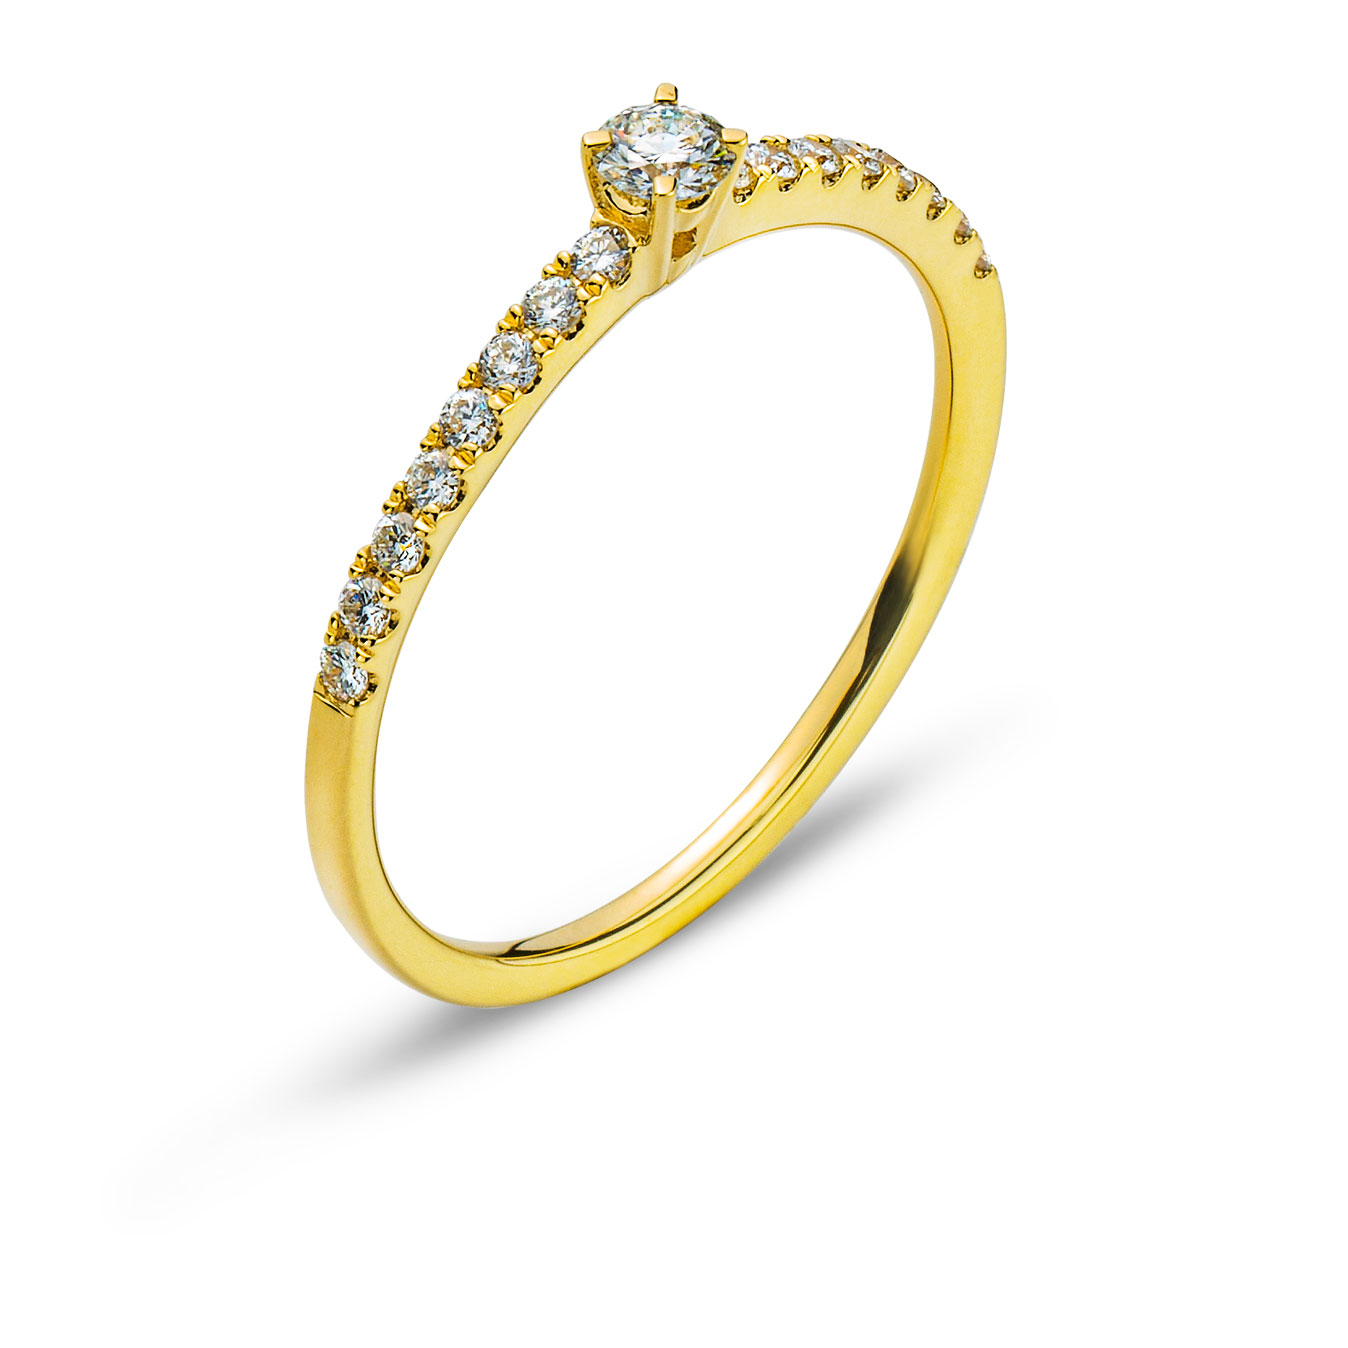 AURONOS Prestige Yellow gold 18K diamonds 0.47ct